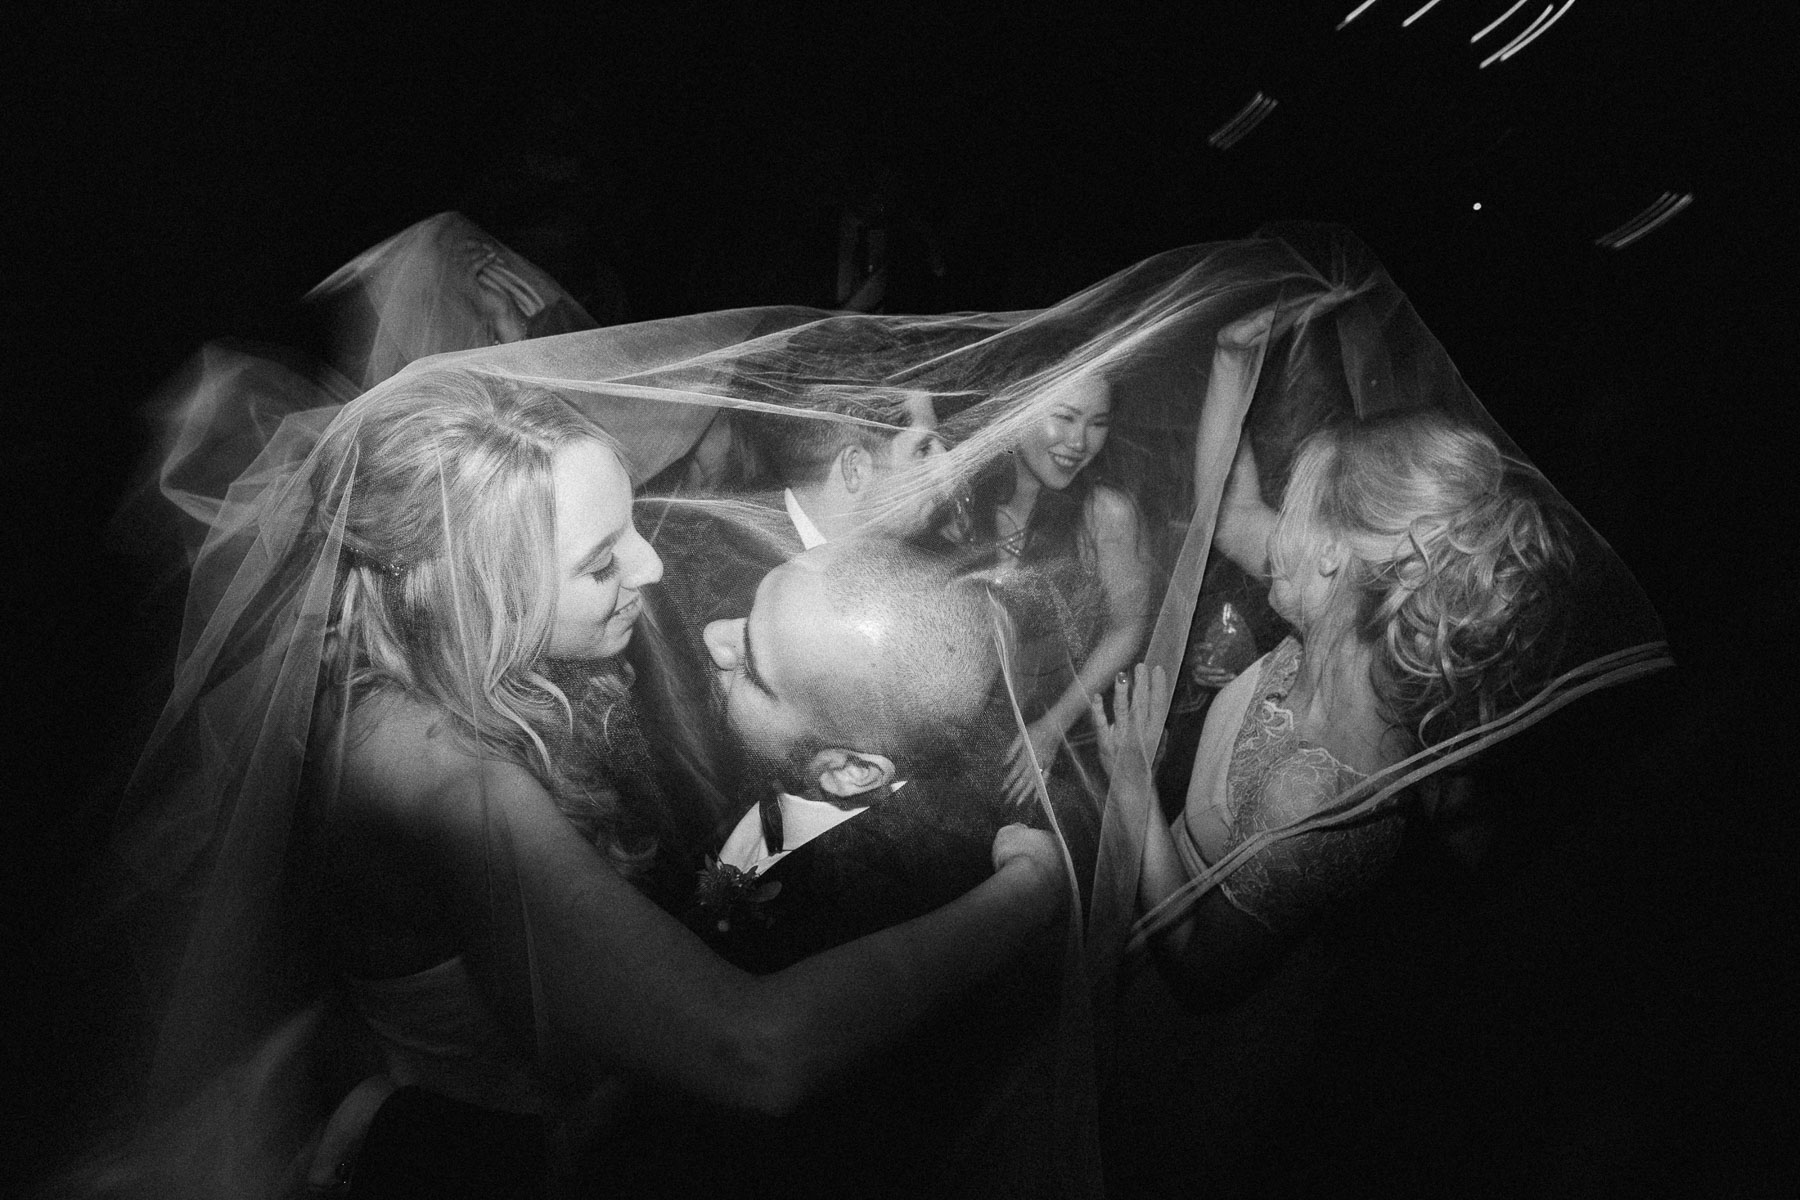 brides and guests dance together under her veil